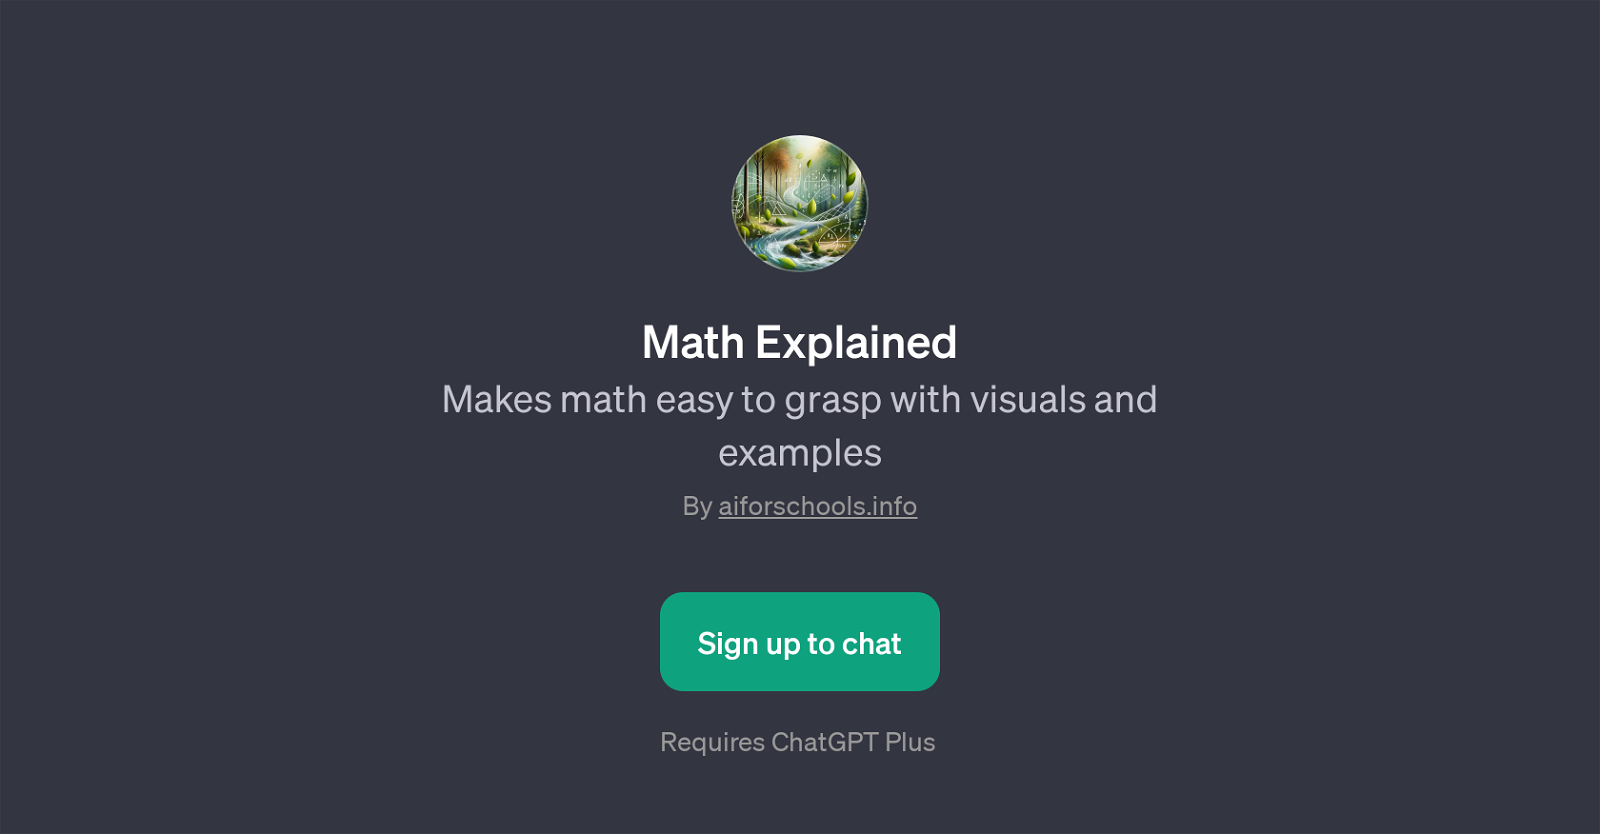 Math Explained website